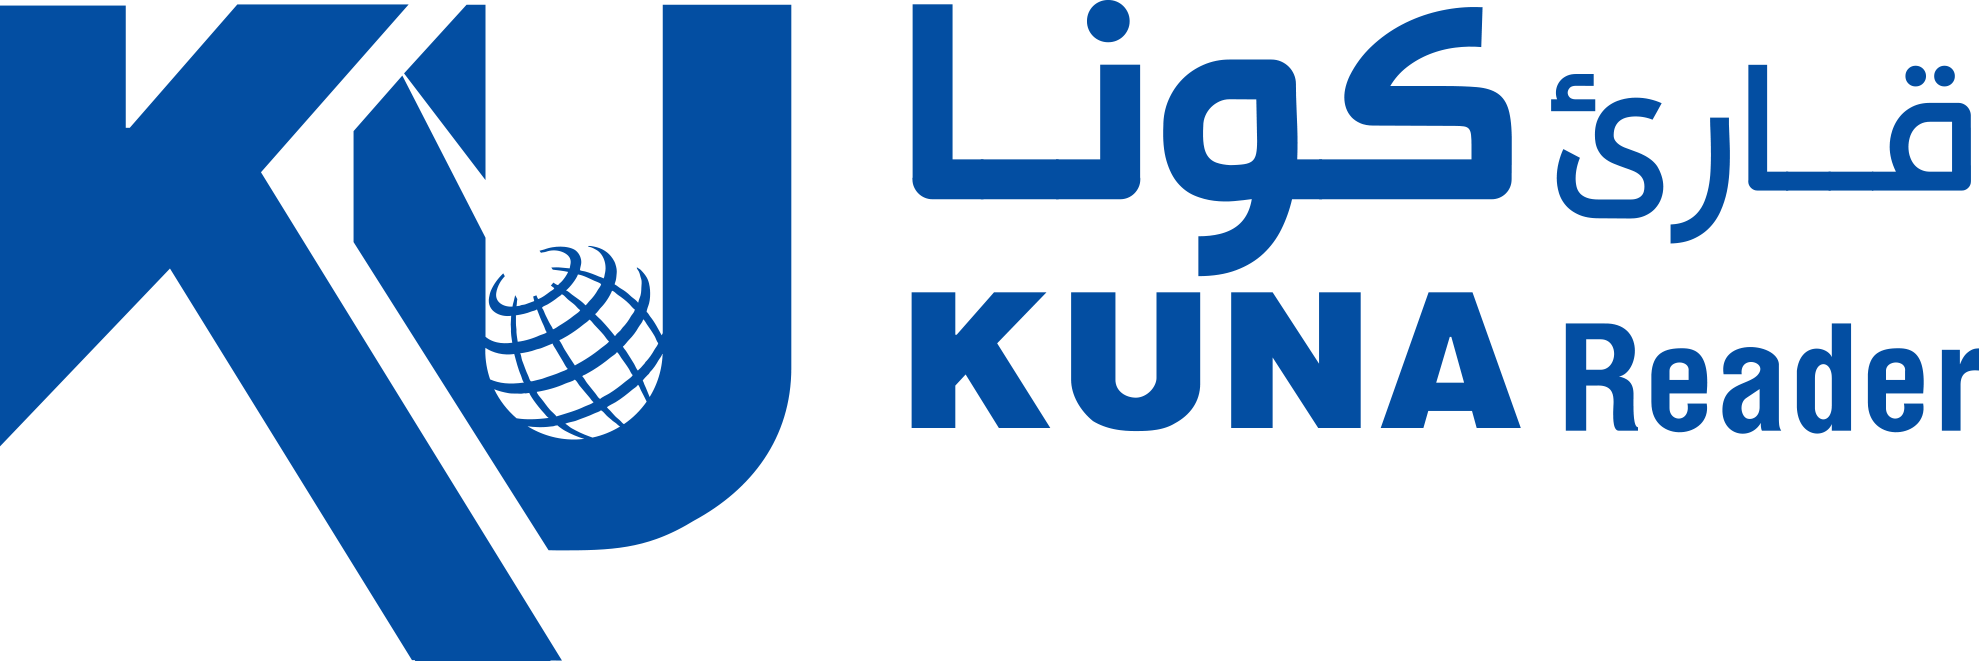 Kuwait Oil Company Logo - KUNA - Kuwait News Agency and Events